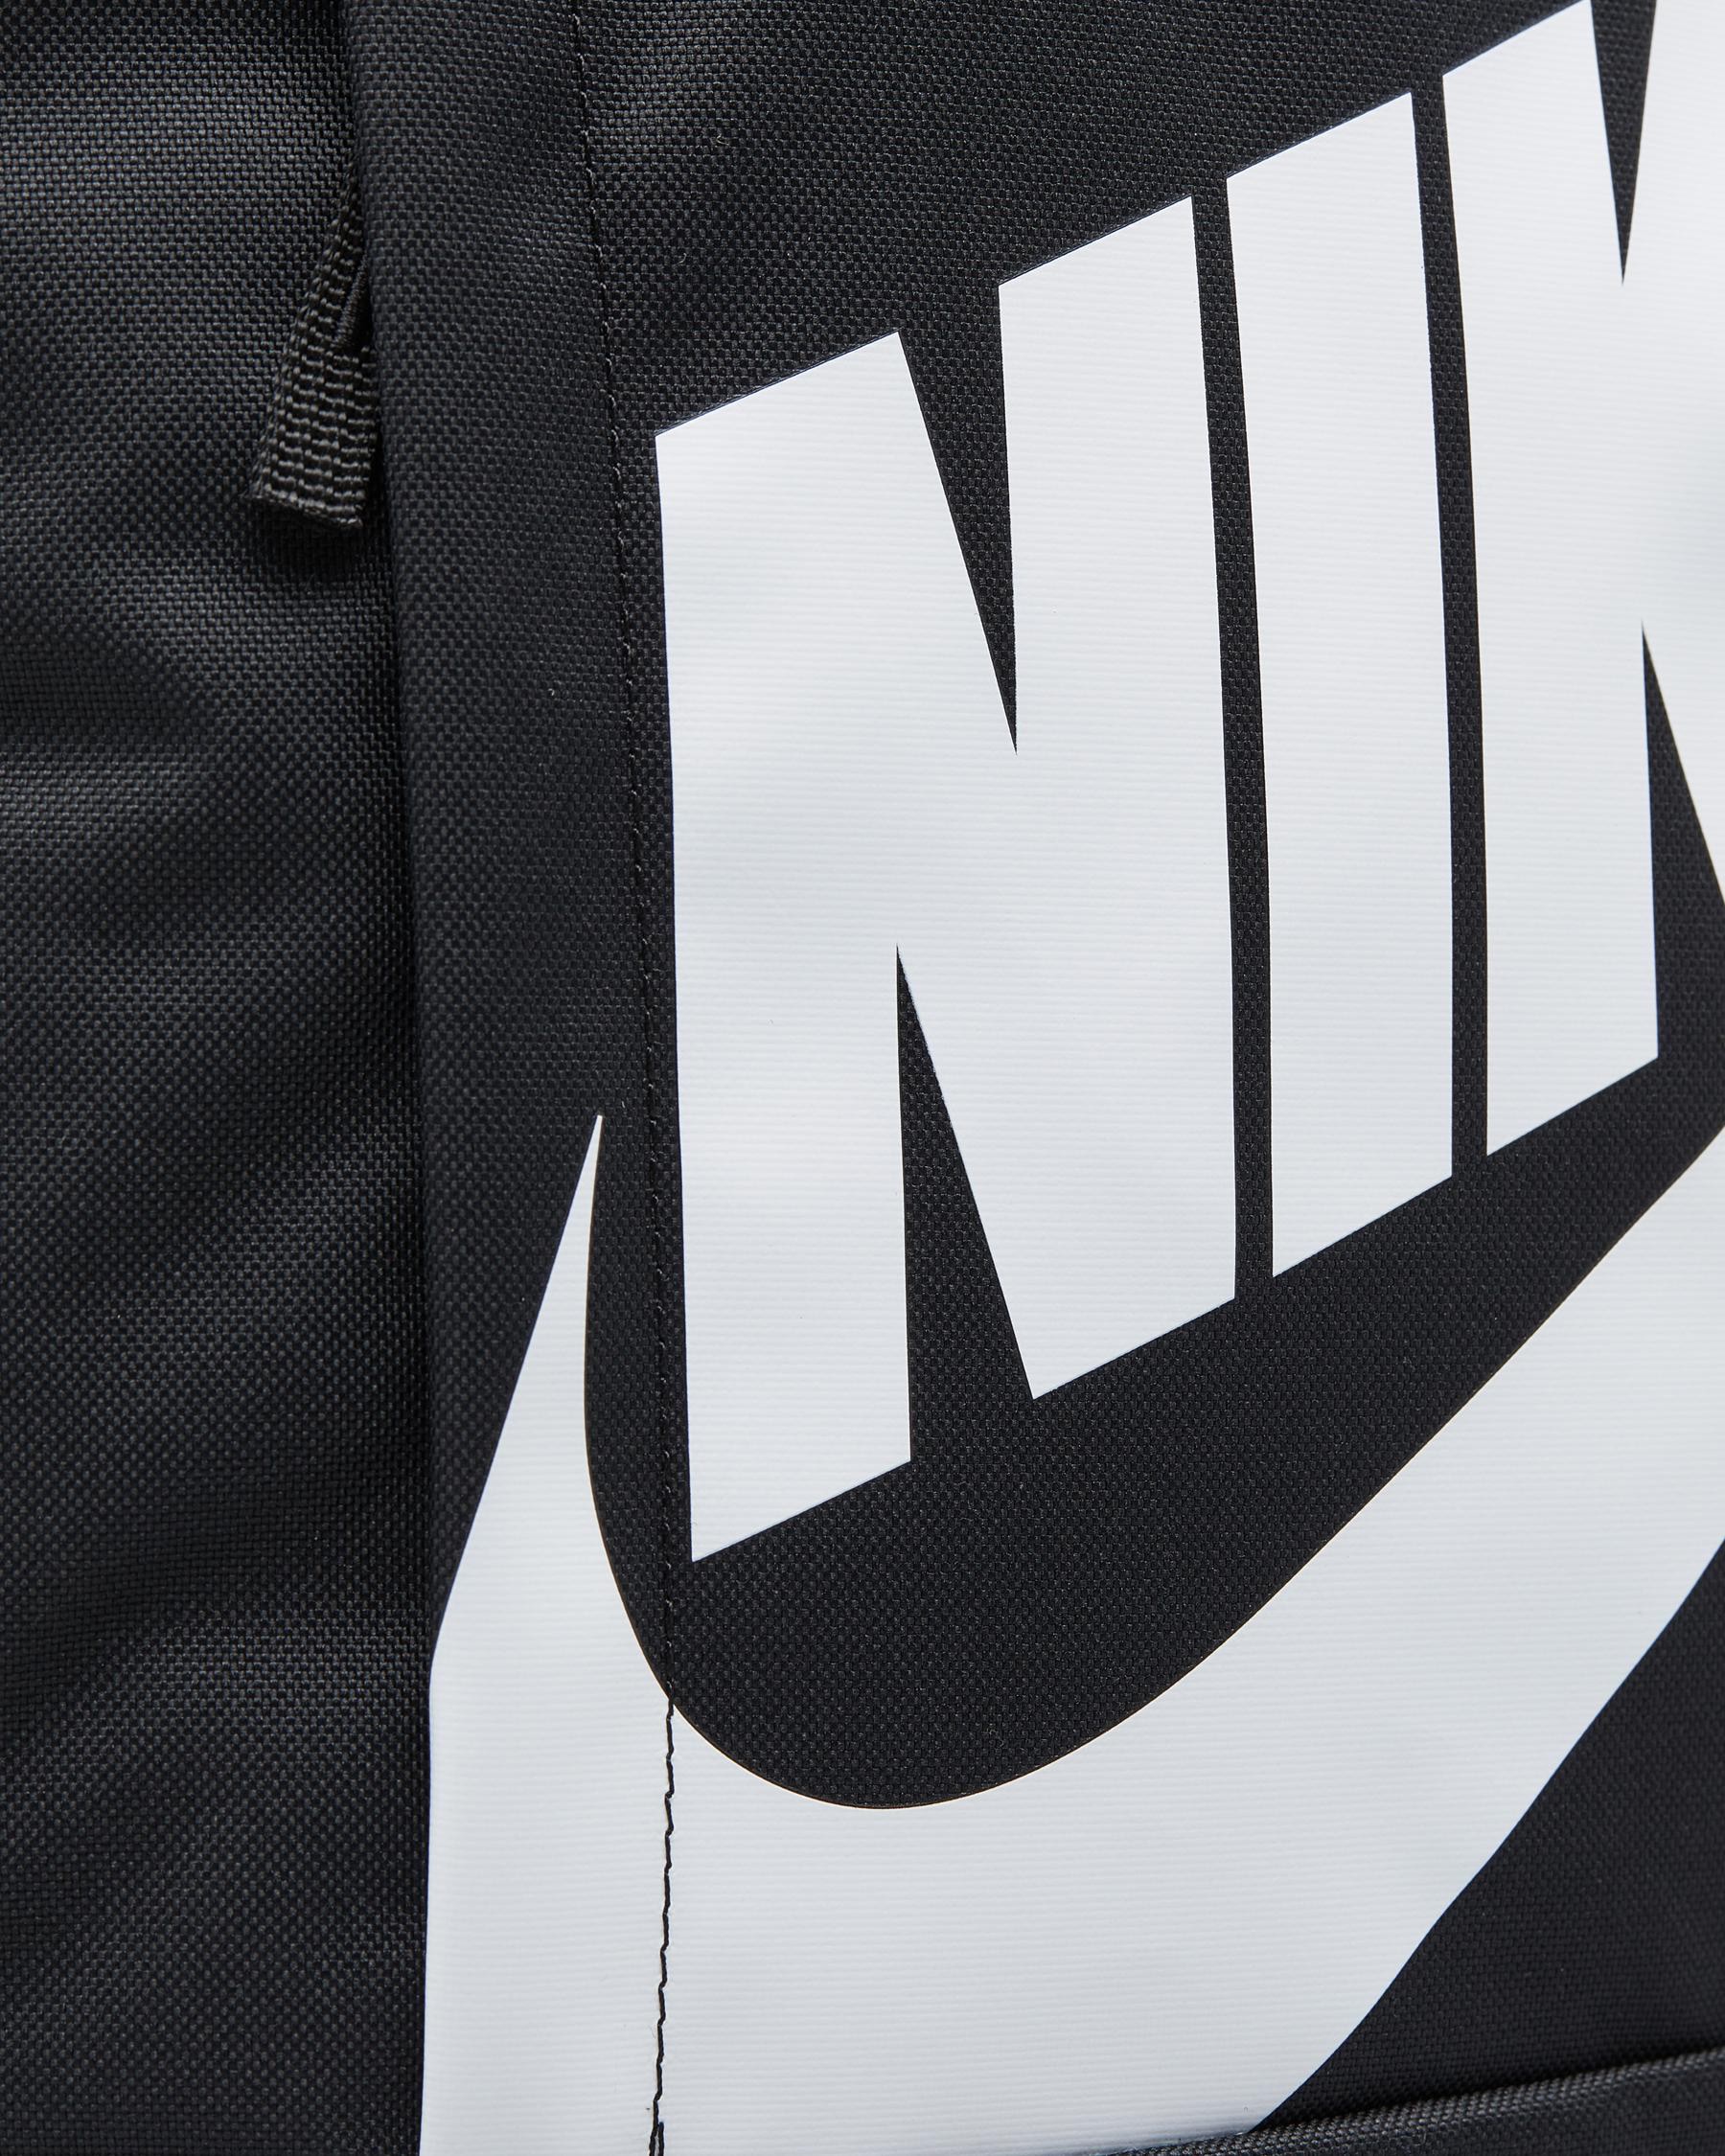 Shop Nike Elemental Backpack In Black/black/white - Fast Shipping ...